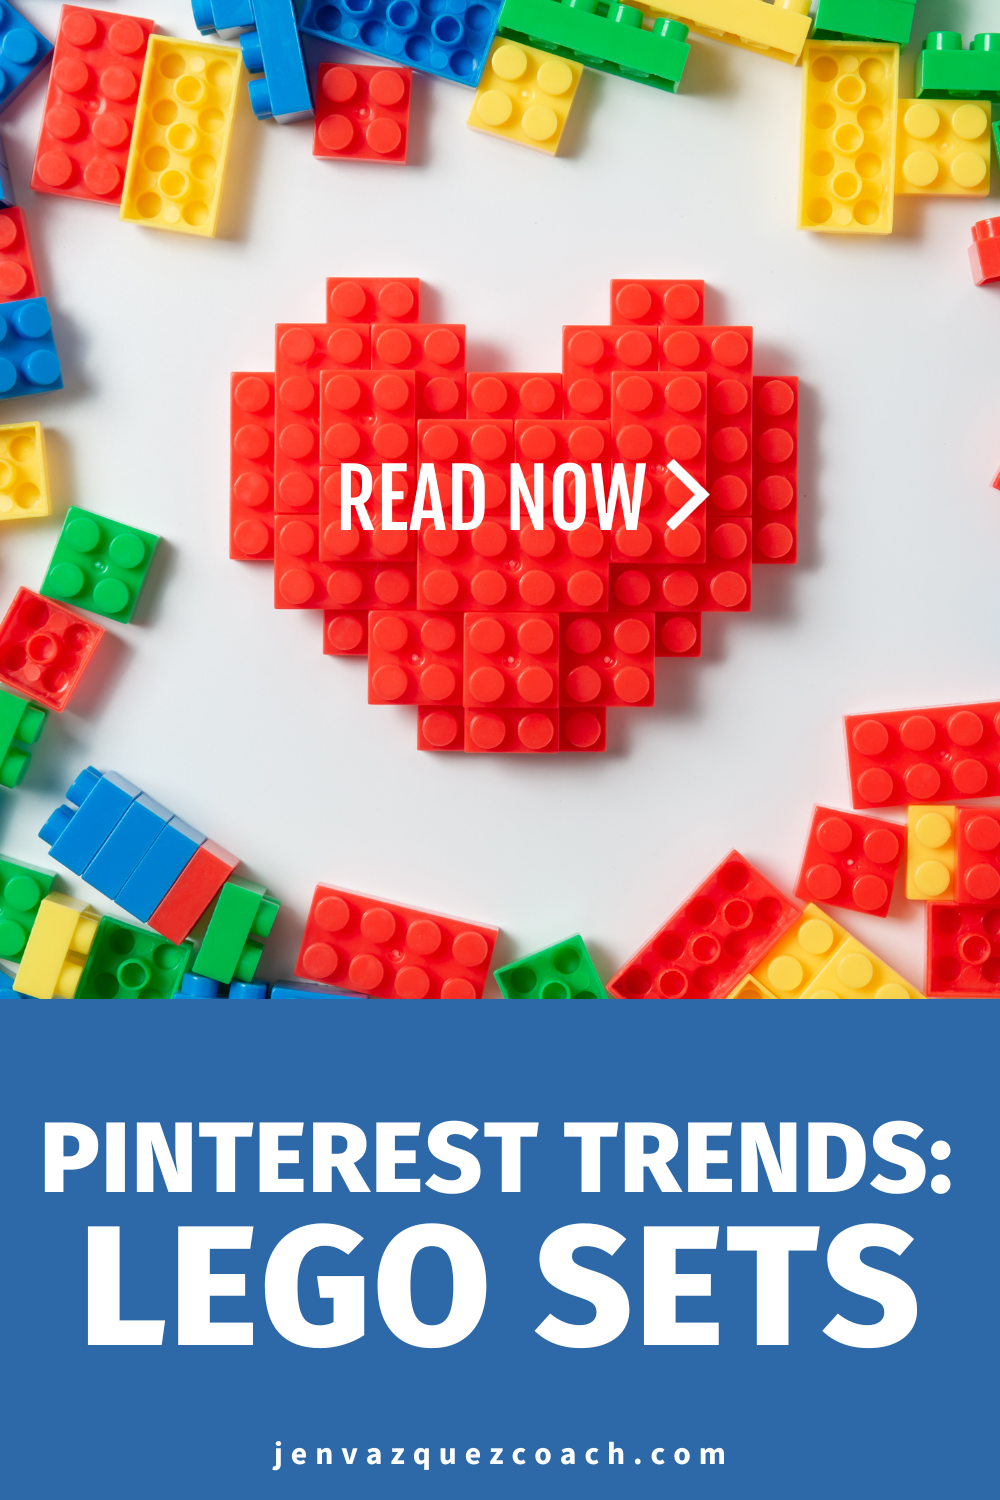 11-19-23 Pinterest Trends: Gifting Season Pinterest Pin Jen Vazquez Media - Pinterest Manager and Pinterest Marketing Expert - Pinterest Pioneer